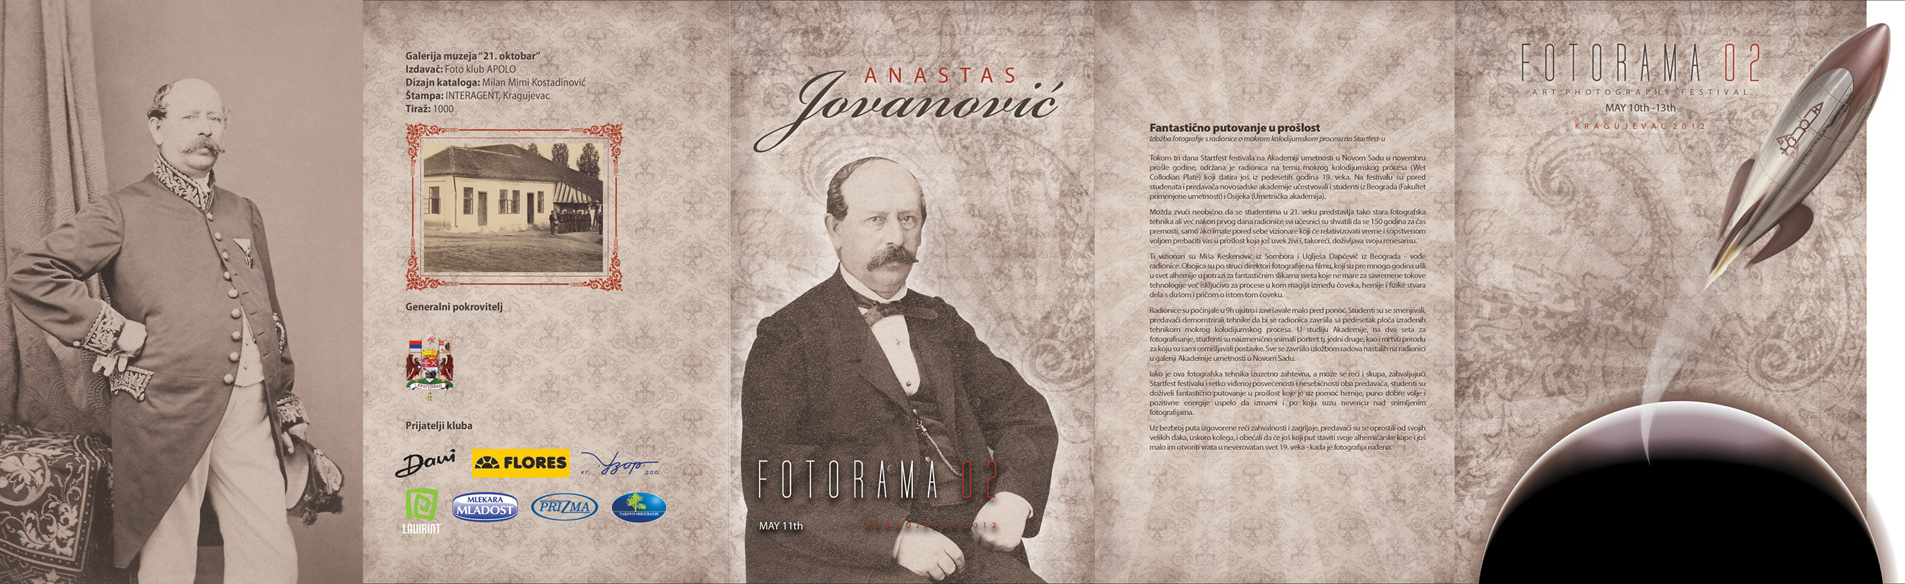 Otvaranje izložbe fotografija starih fotografa iz Kragujevca (19. i rani 20. vek), Anastas Jovanović